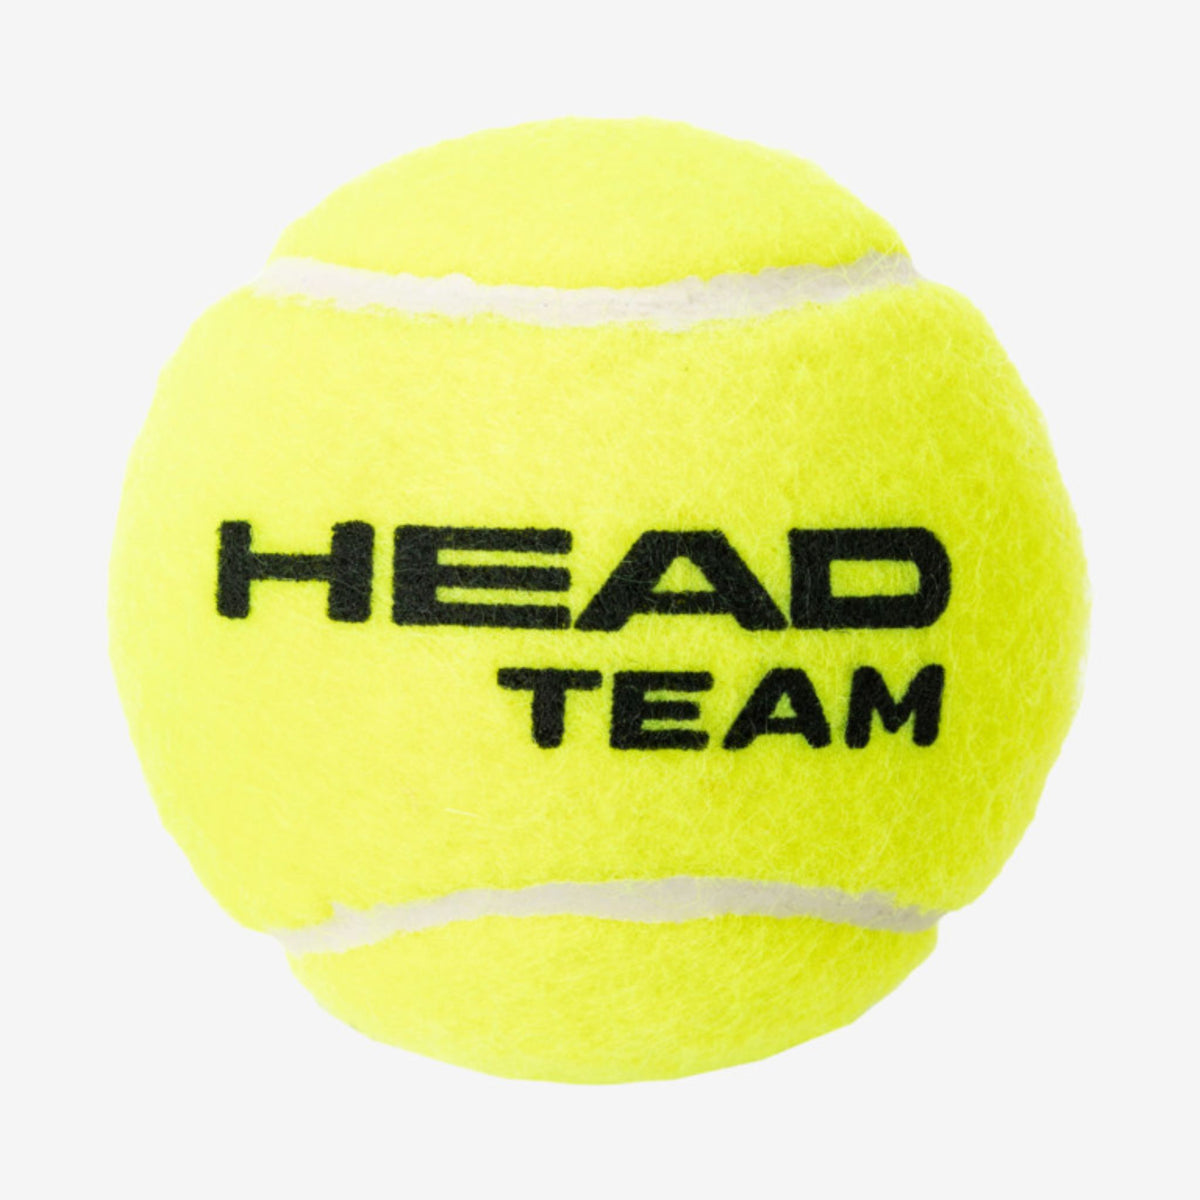 Head Team Tennis Balls - Pack of 12 (3x4)